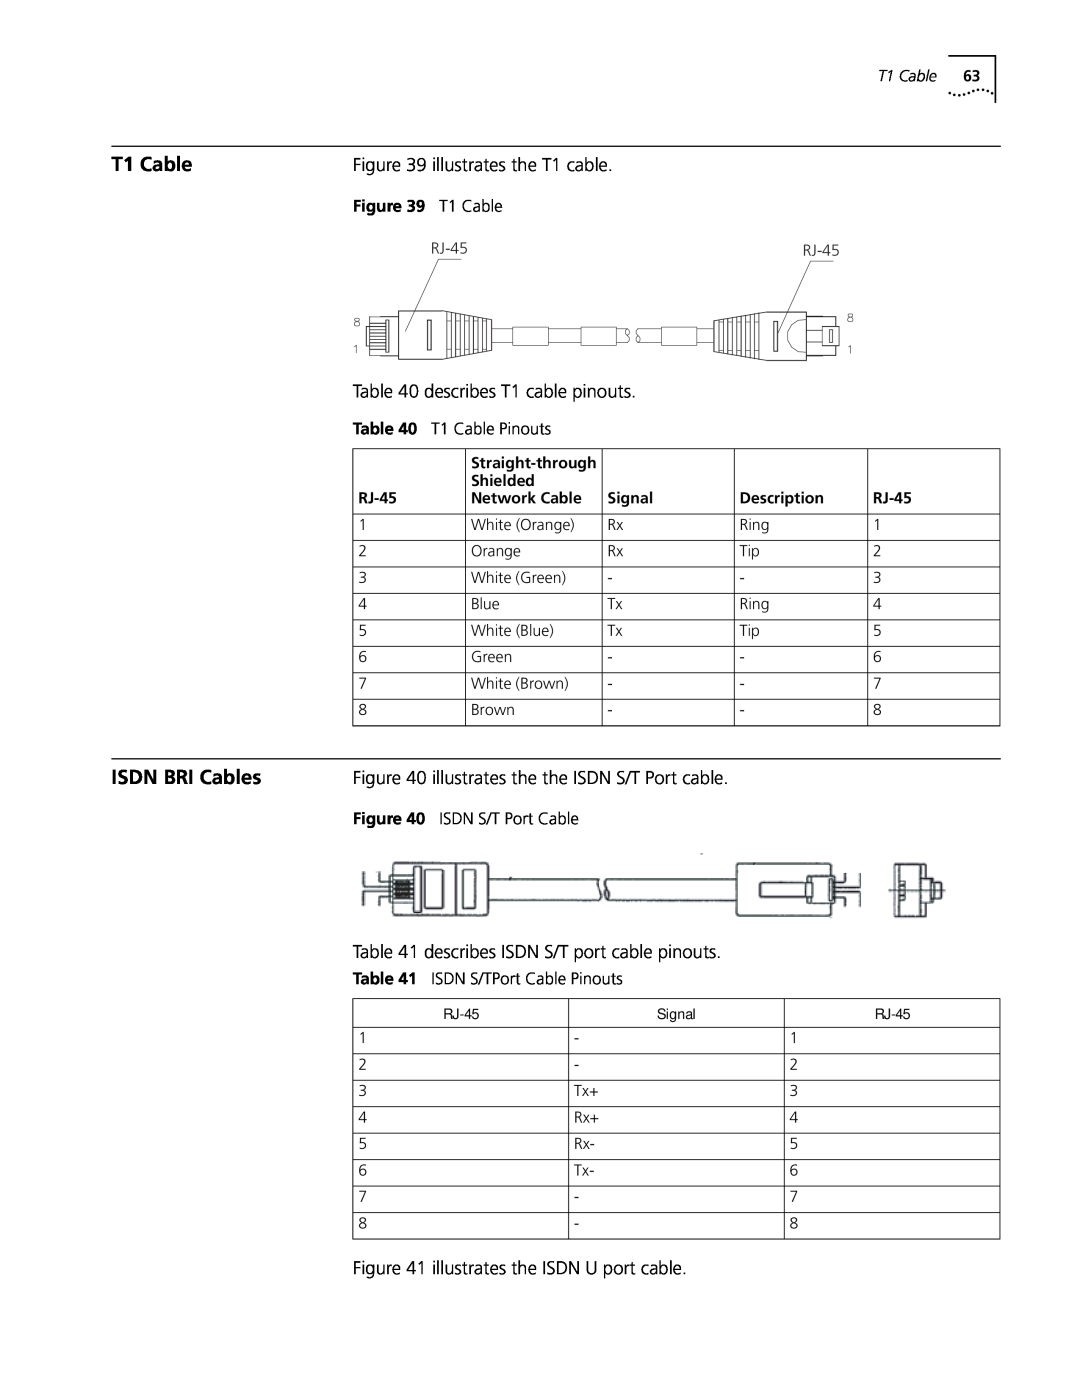 3Com 3012 (3C13612) ISDN BRI Cables, T1 Cable Pinouts, illustrates the the ISDN S/T Port cable, ISDN S/T Port Cable 